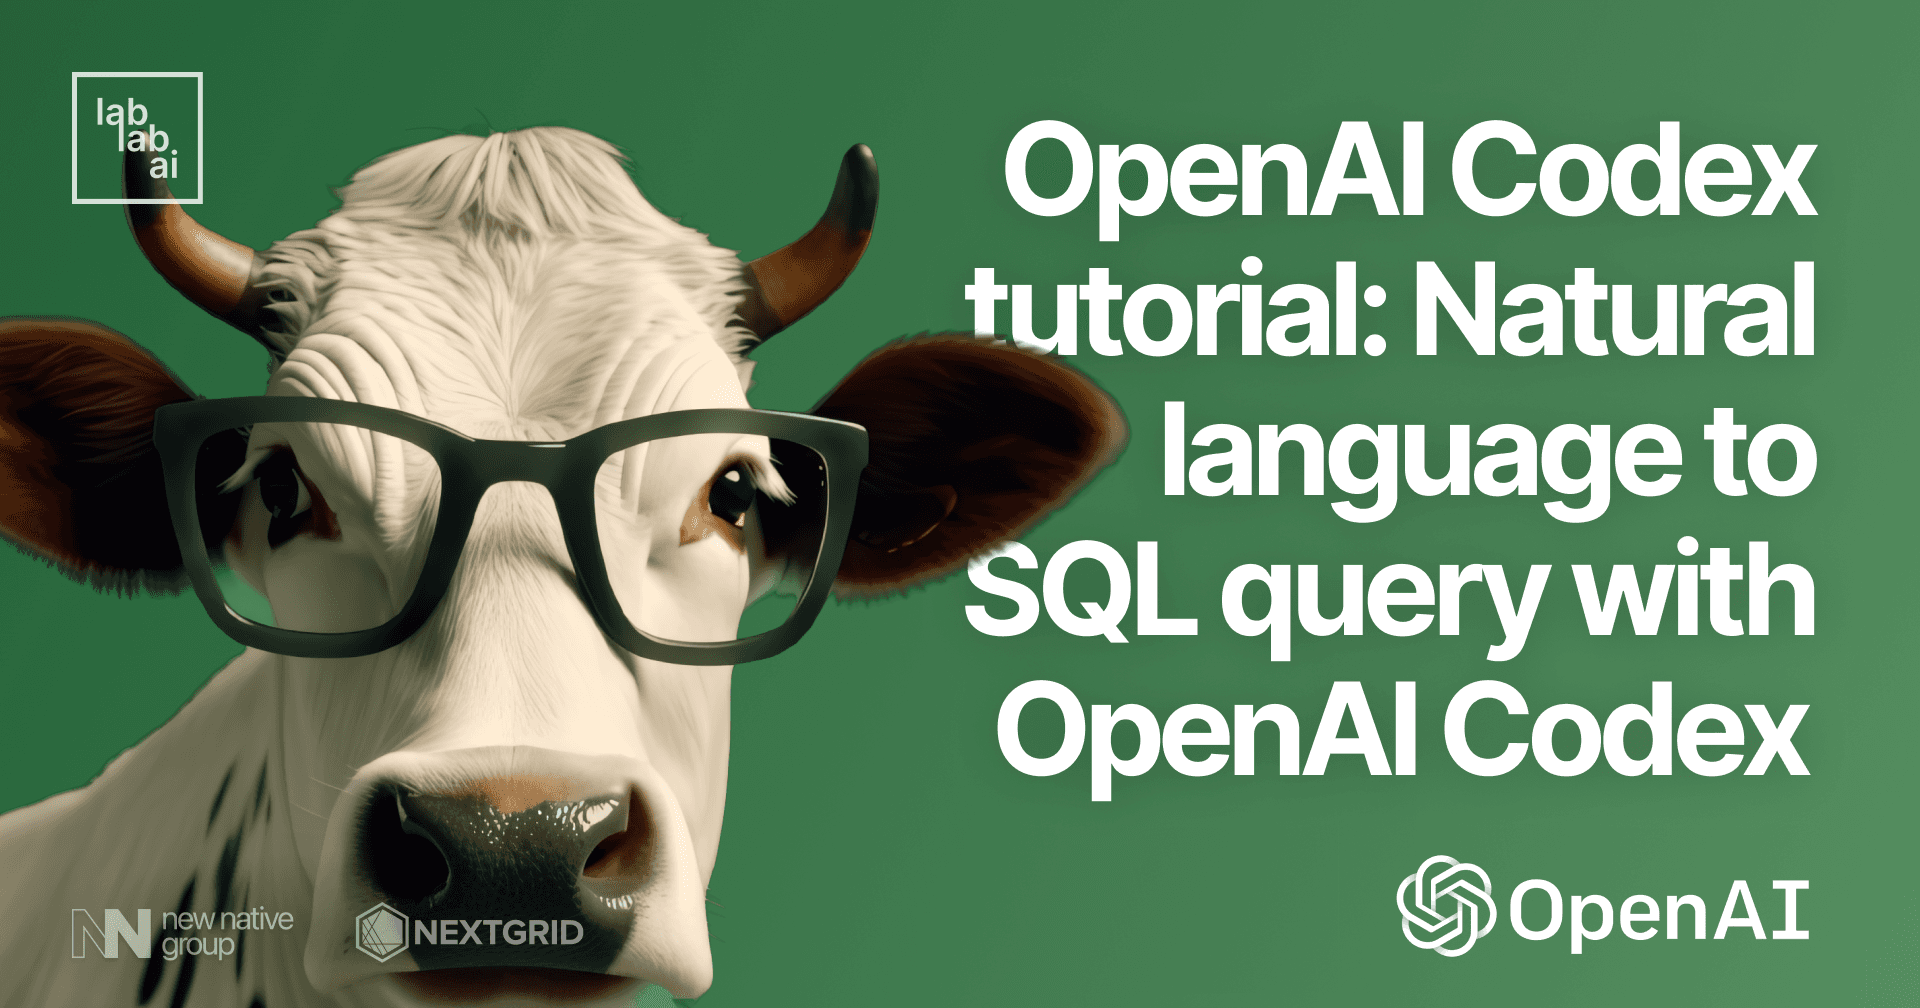 OpenAI Codex tutorial: Natural language to SQL query with OpenAI Codex